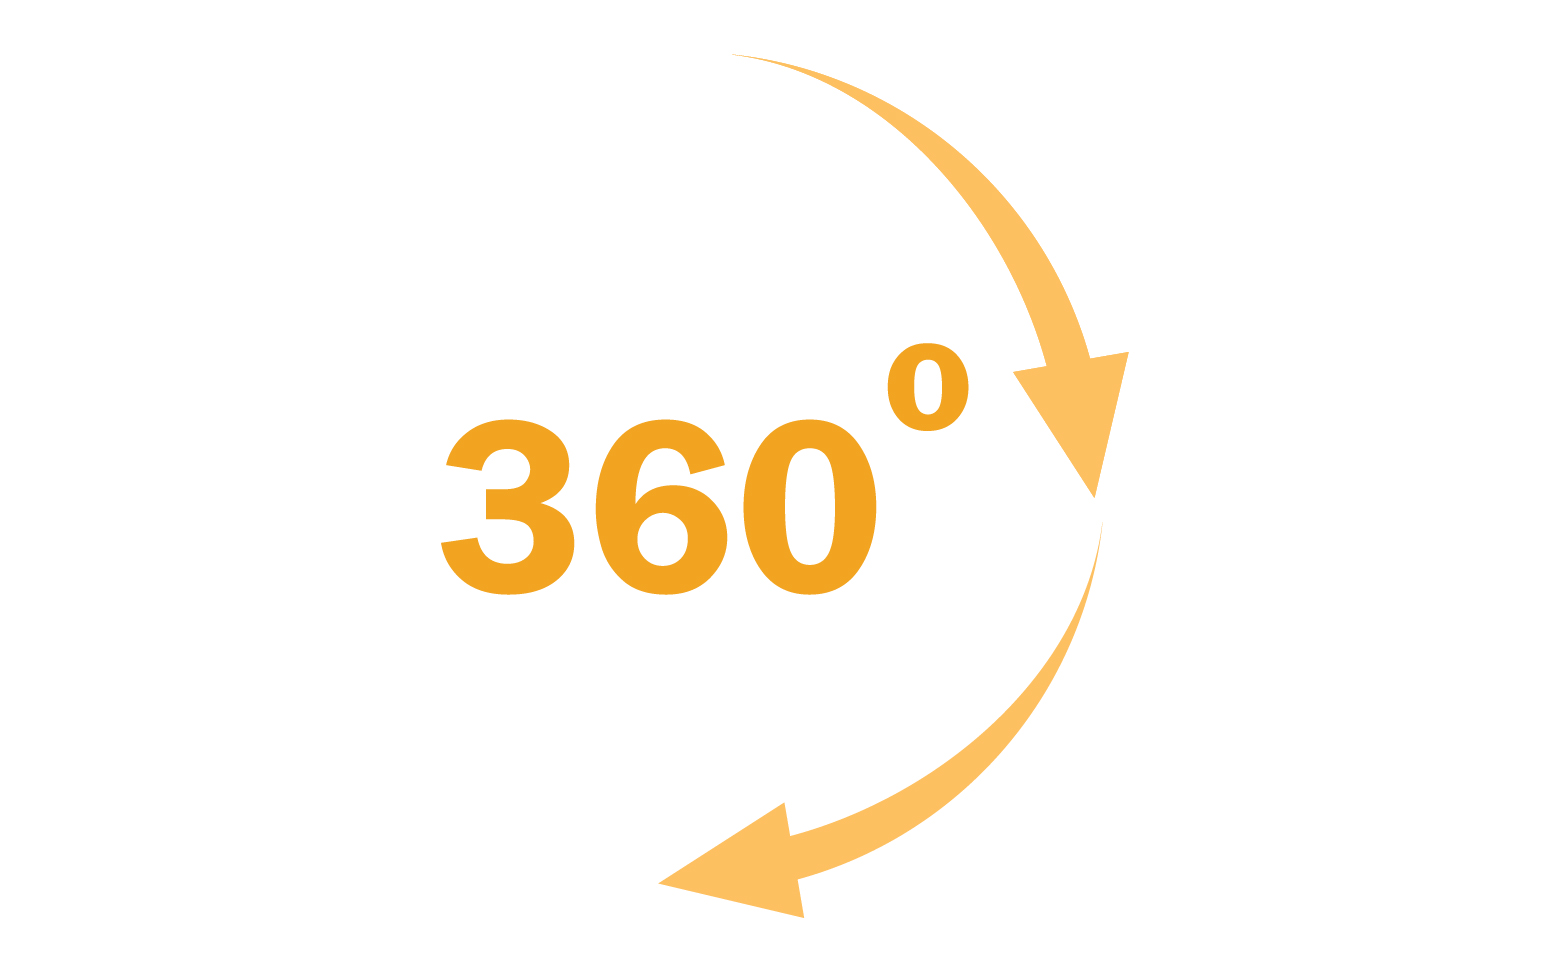 360 degree angle rotation icon symbol logo version v31